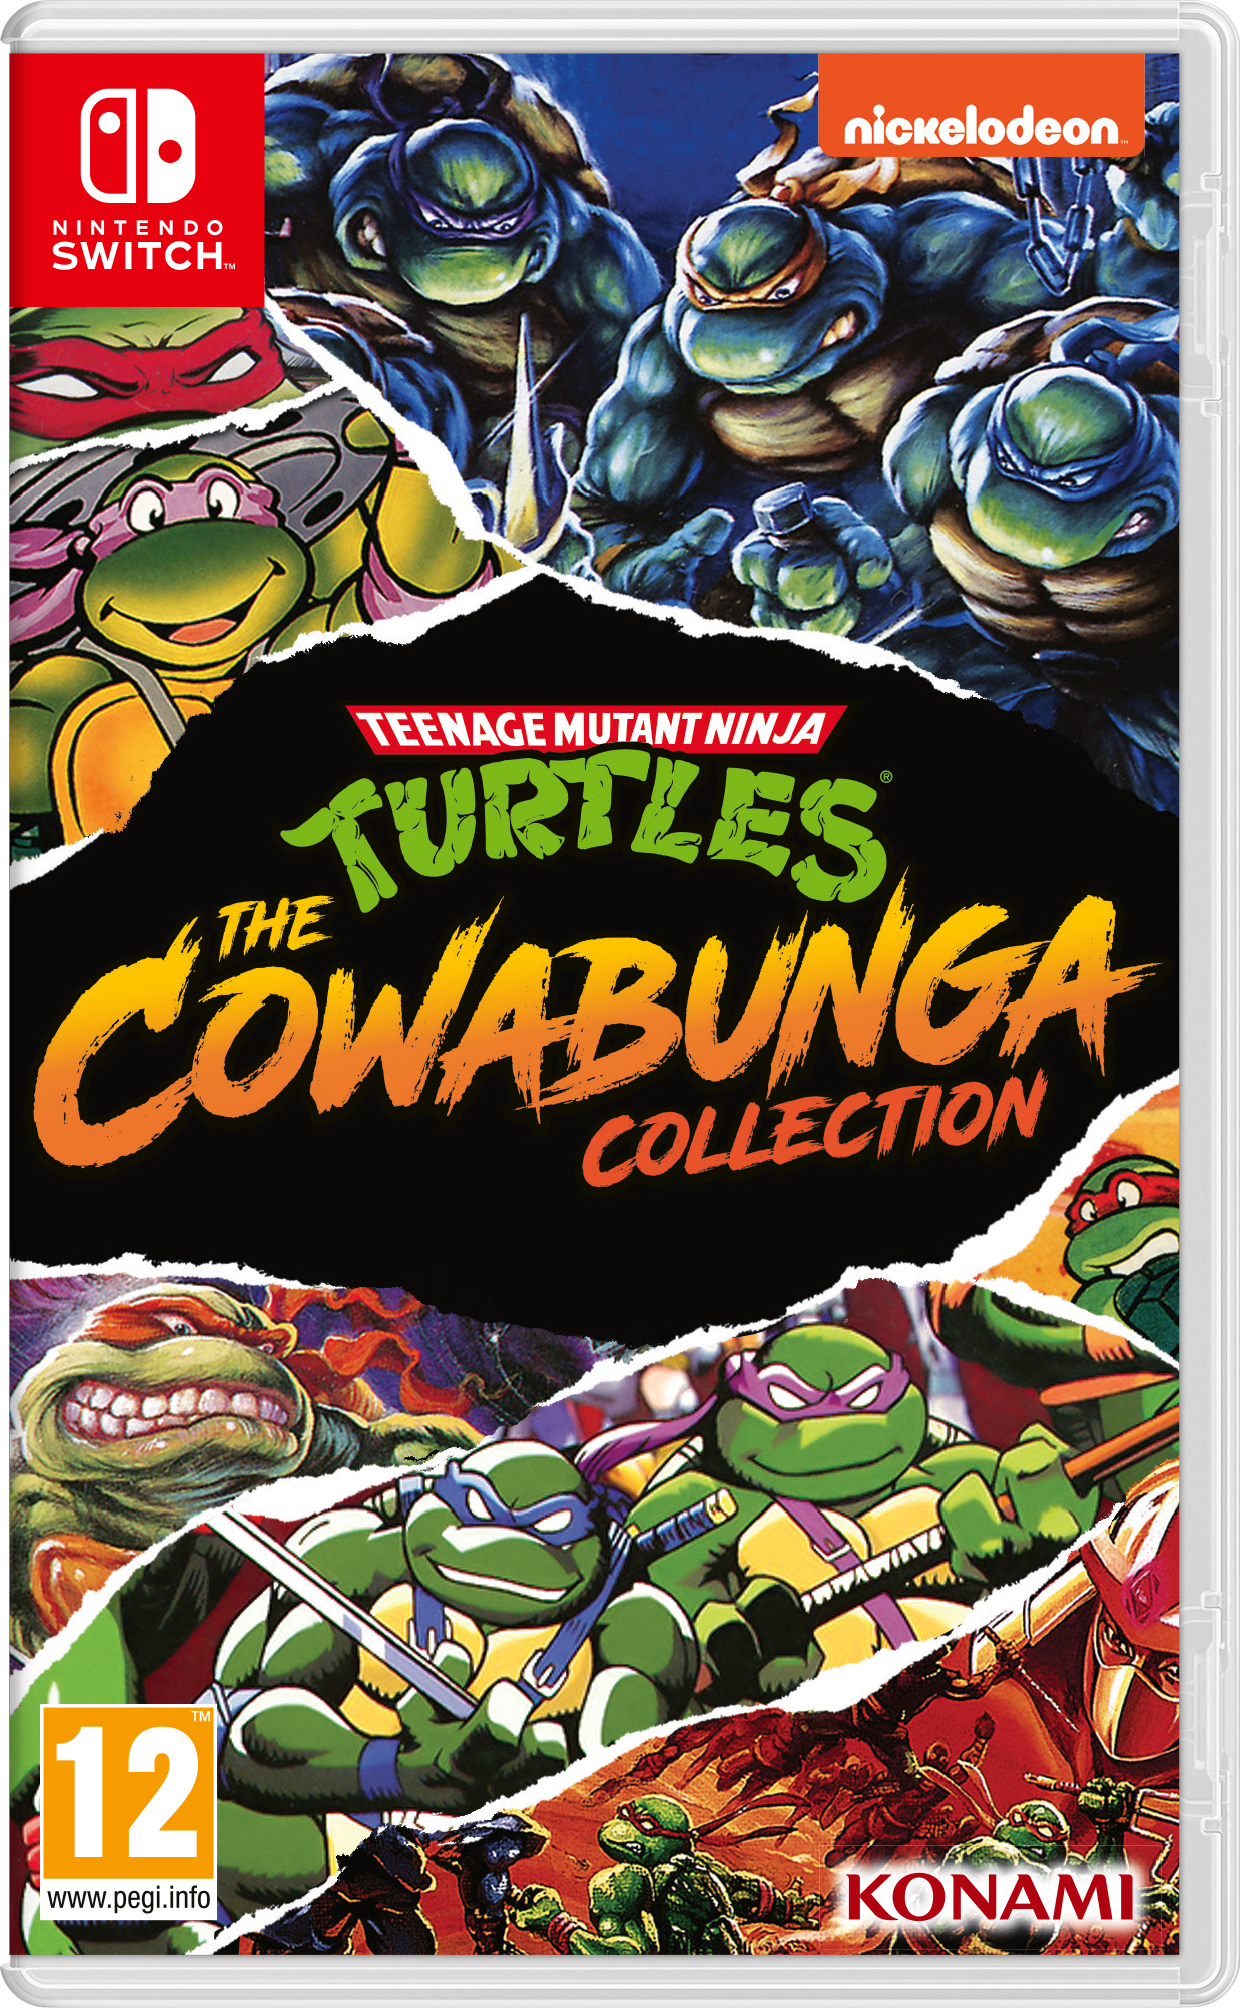 Turtles cowabunga collection. Нинтендо свитч ниндзя. TMNT: the Cowabunga collection на Nintendo Switch. Teenage Mutant Ninja Turtles: the Cowabunga. Черепашки ниндзя на Нинтендо свитч.